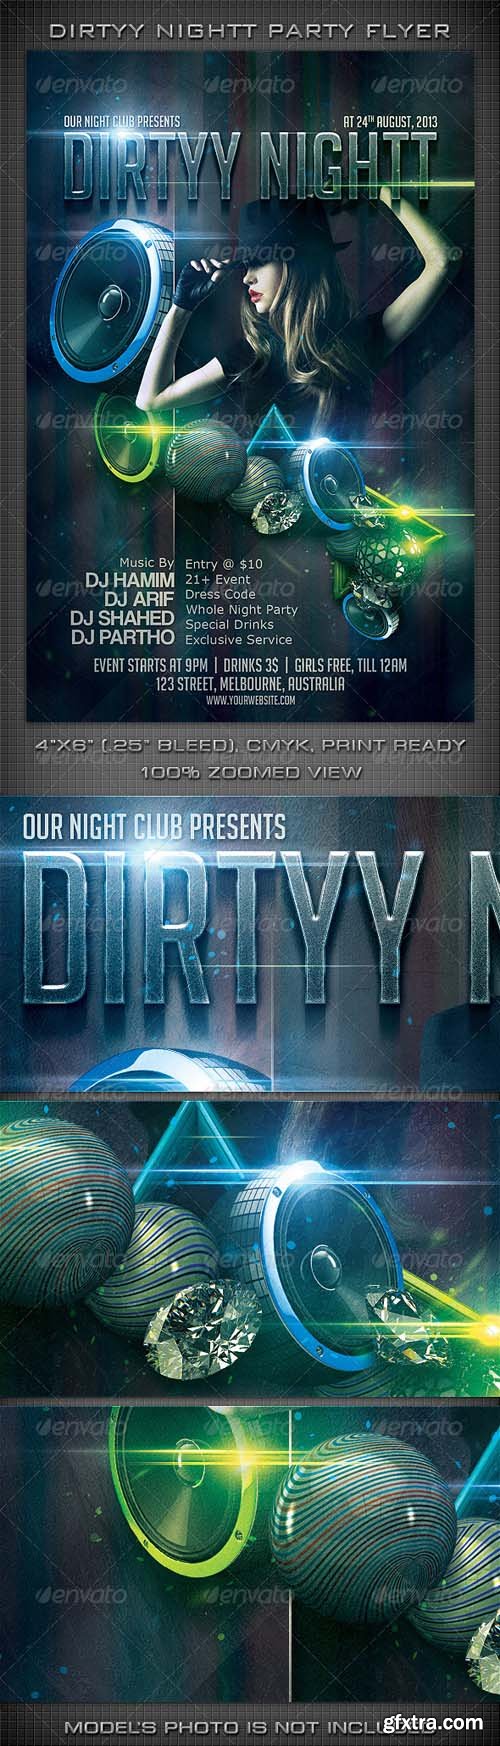 Dirtyy Nightt Party Flyer 5216578